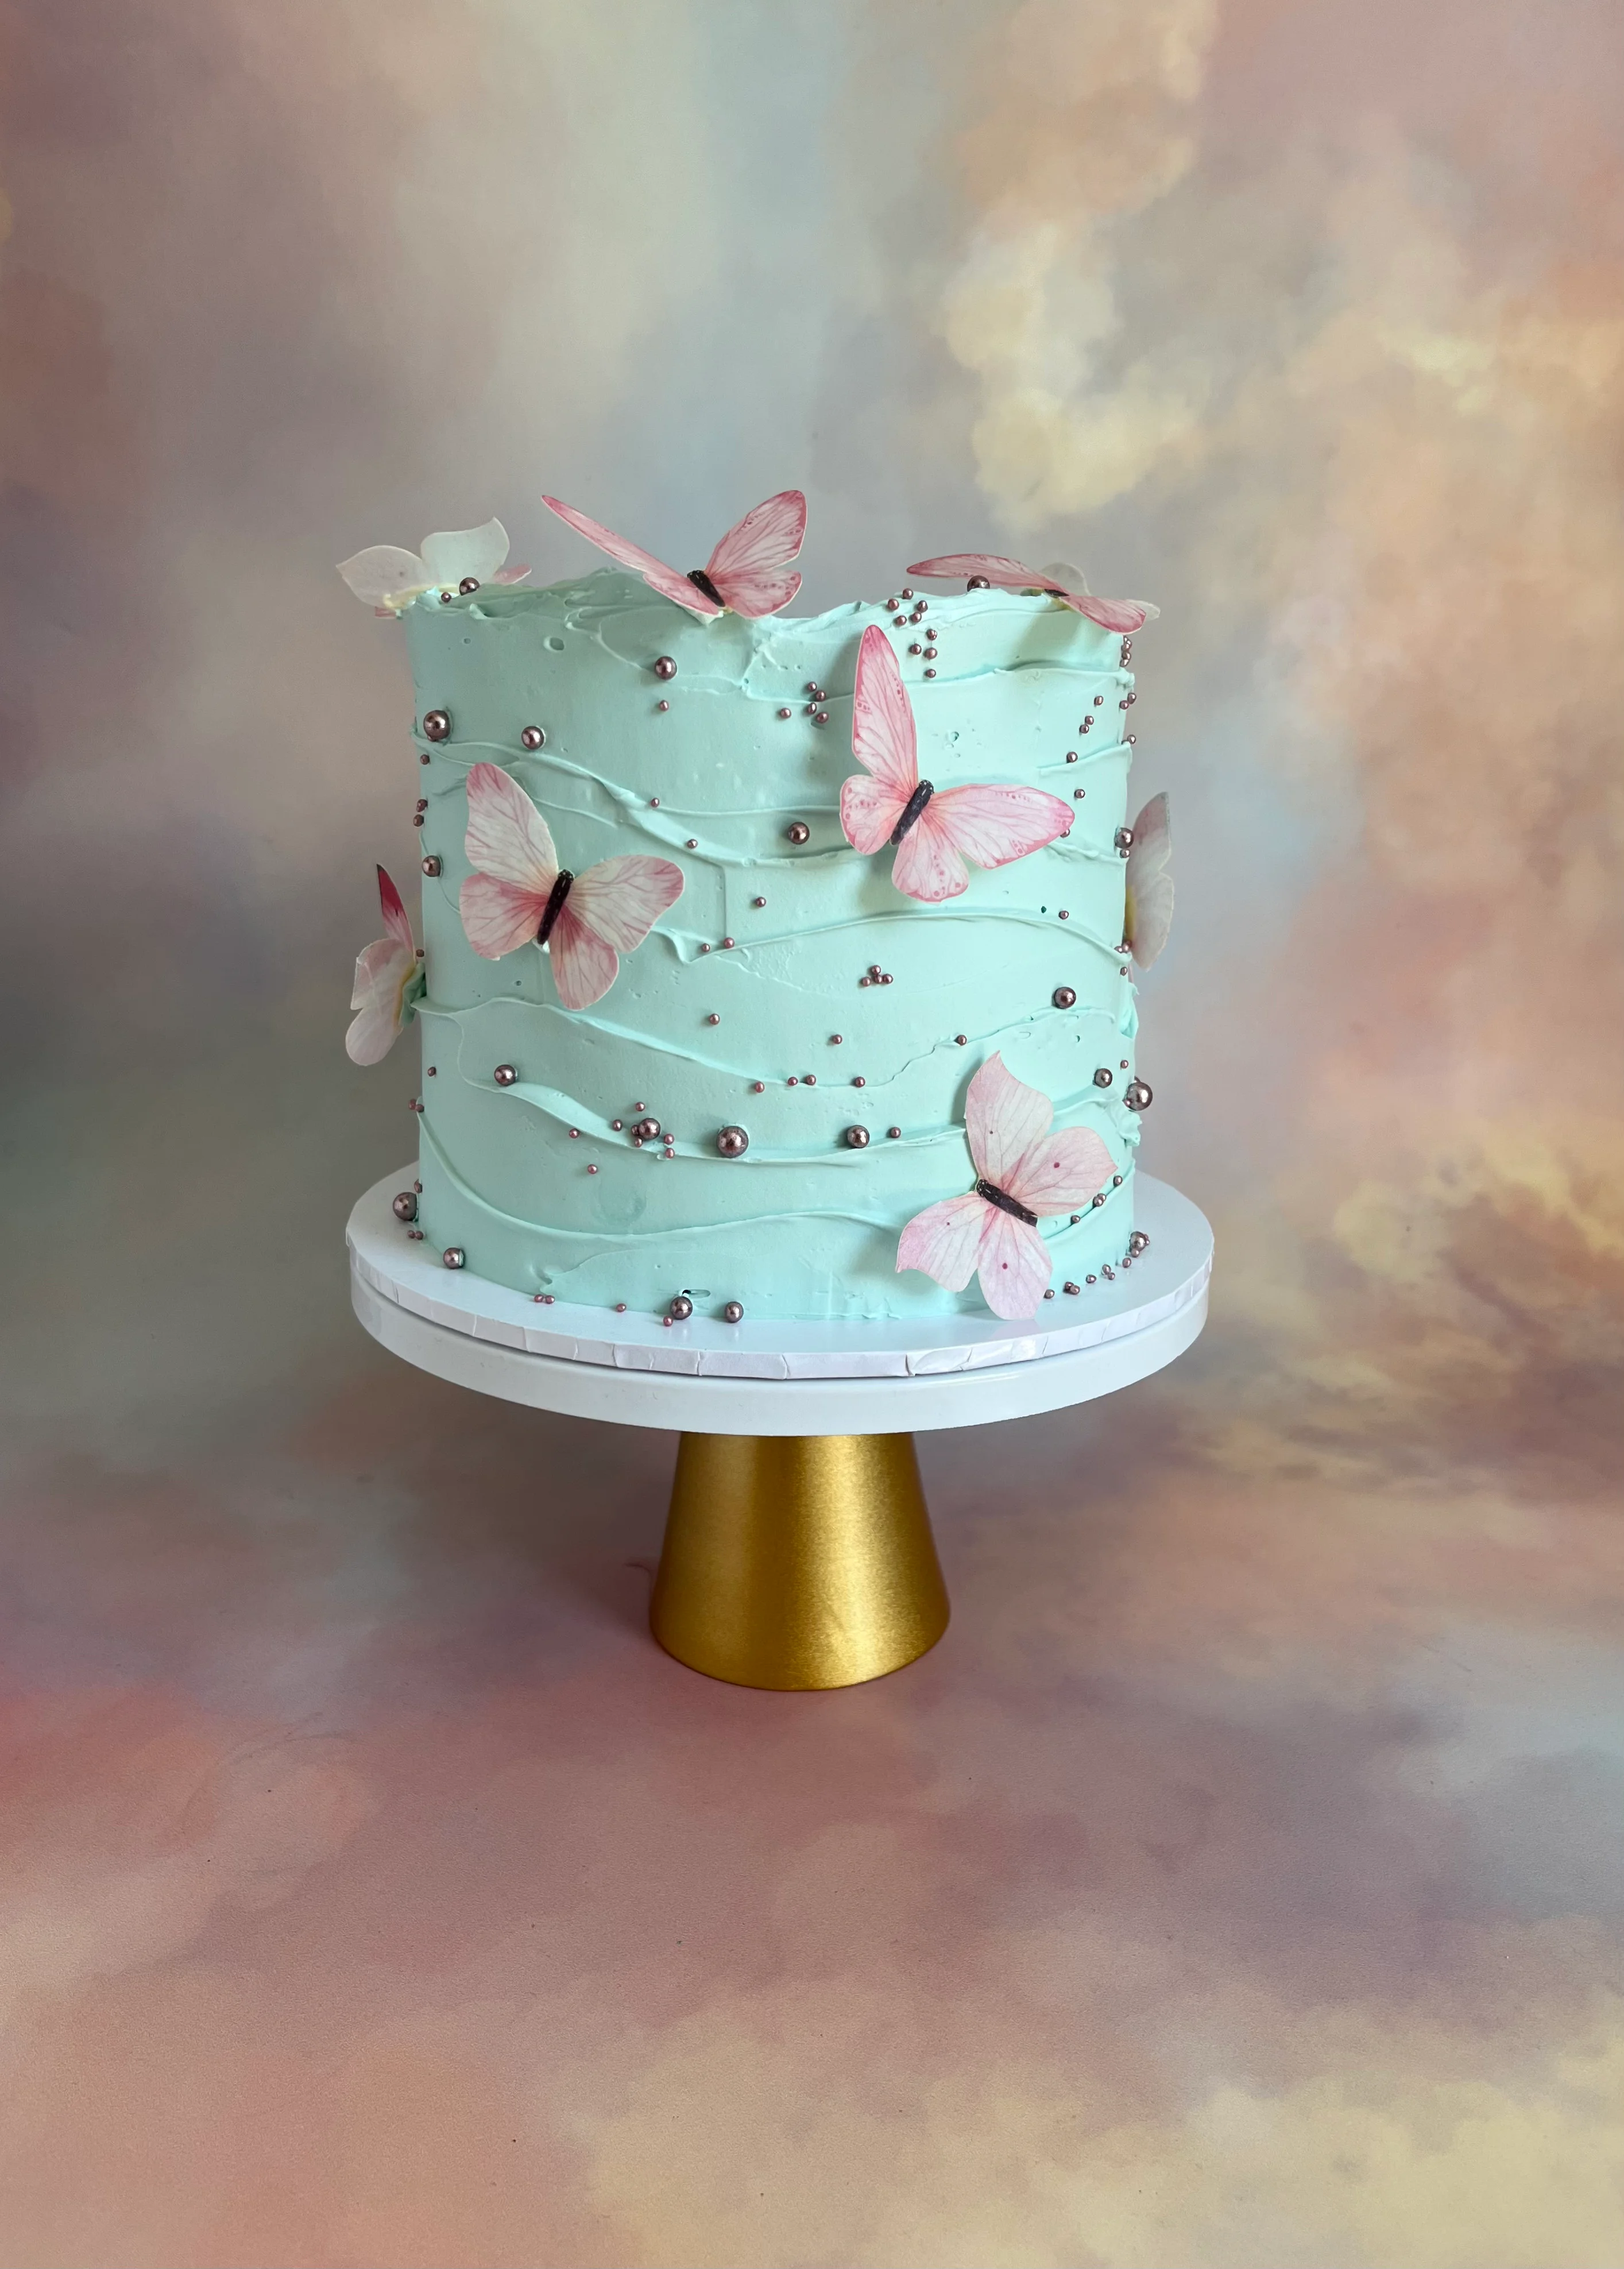 celebration cake